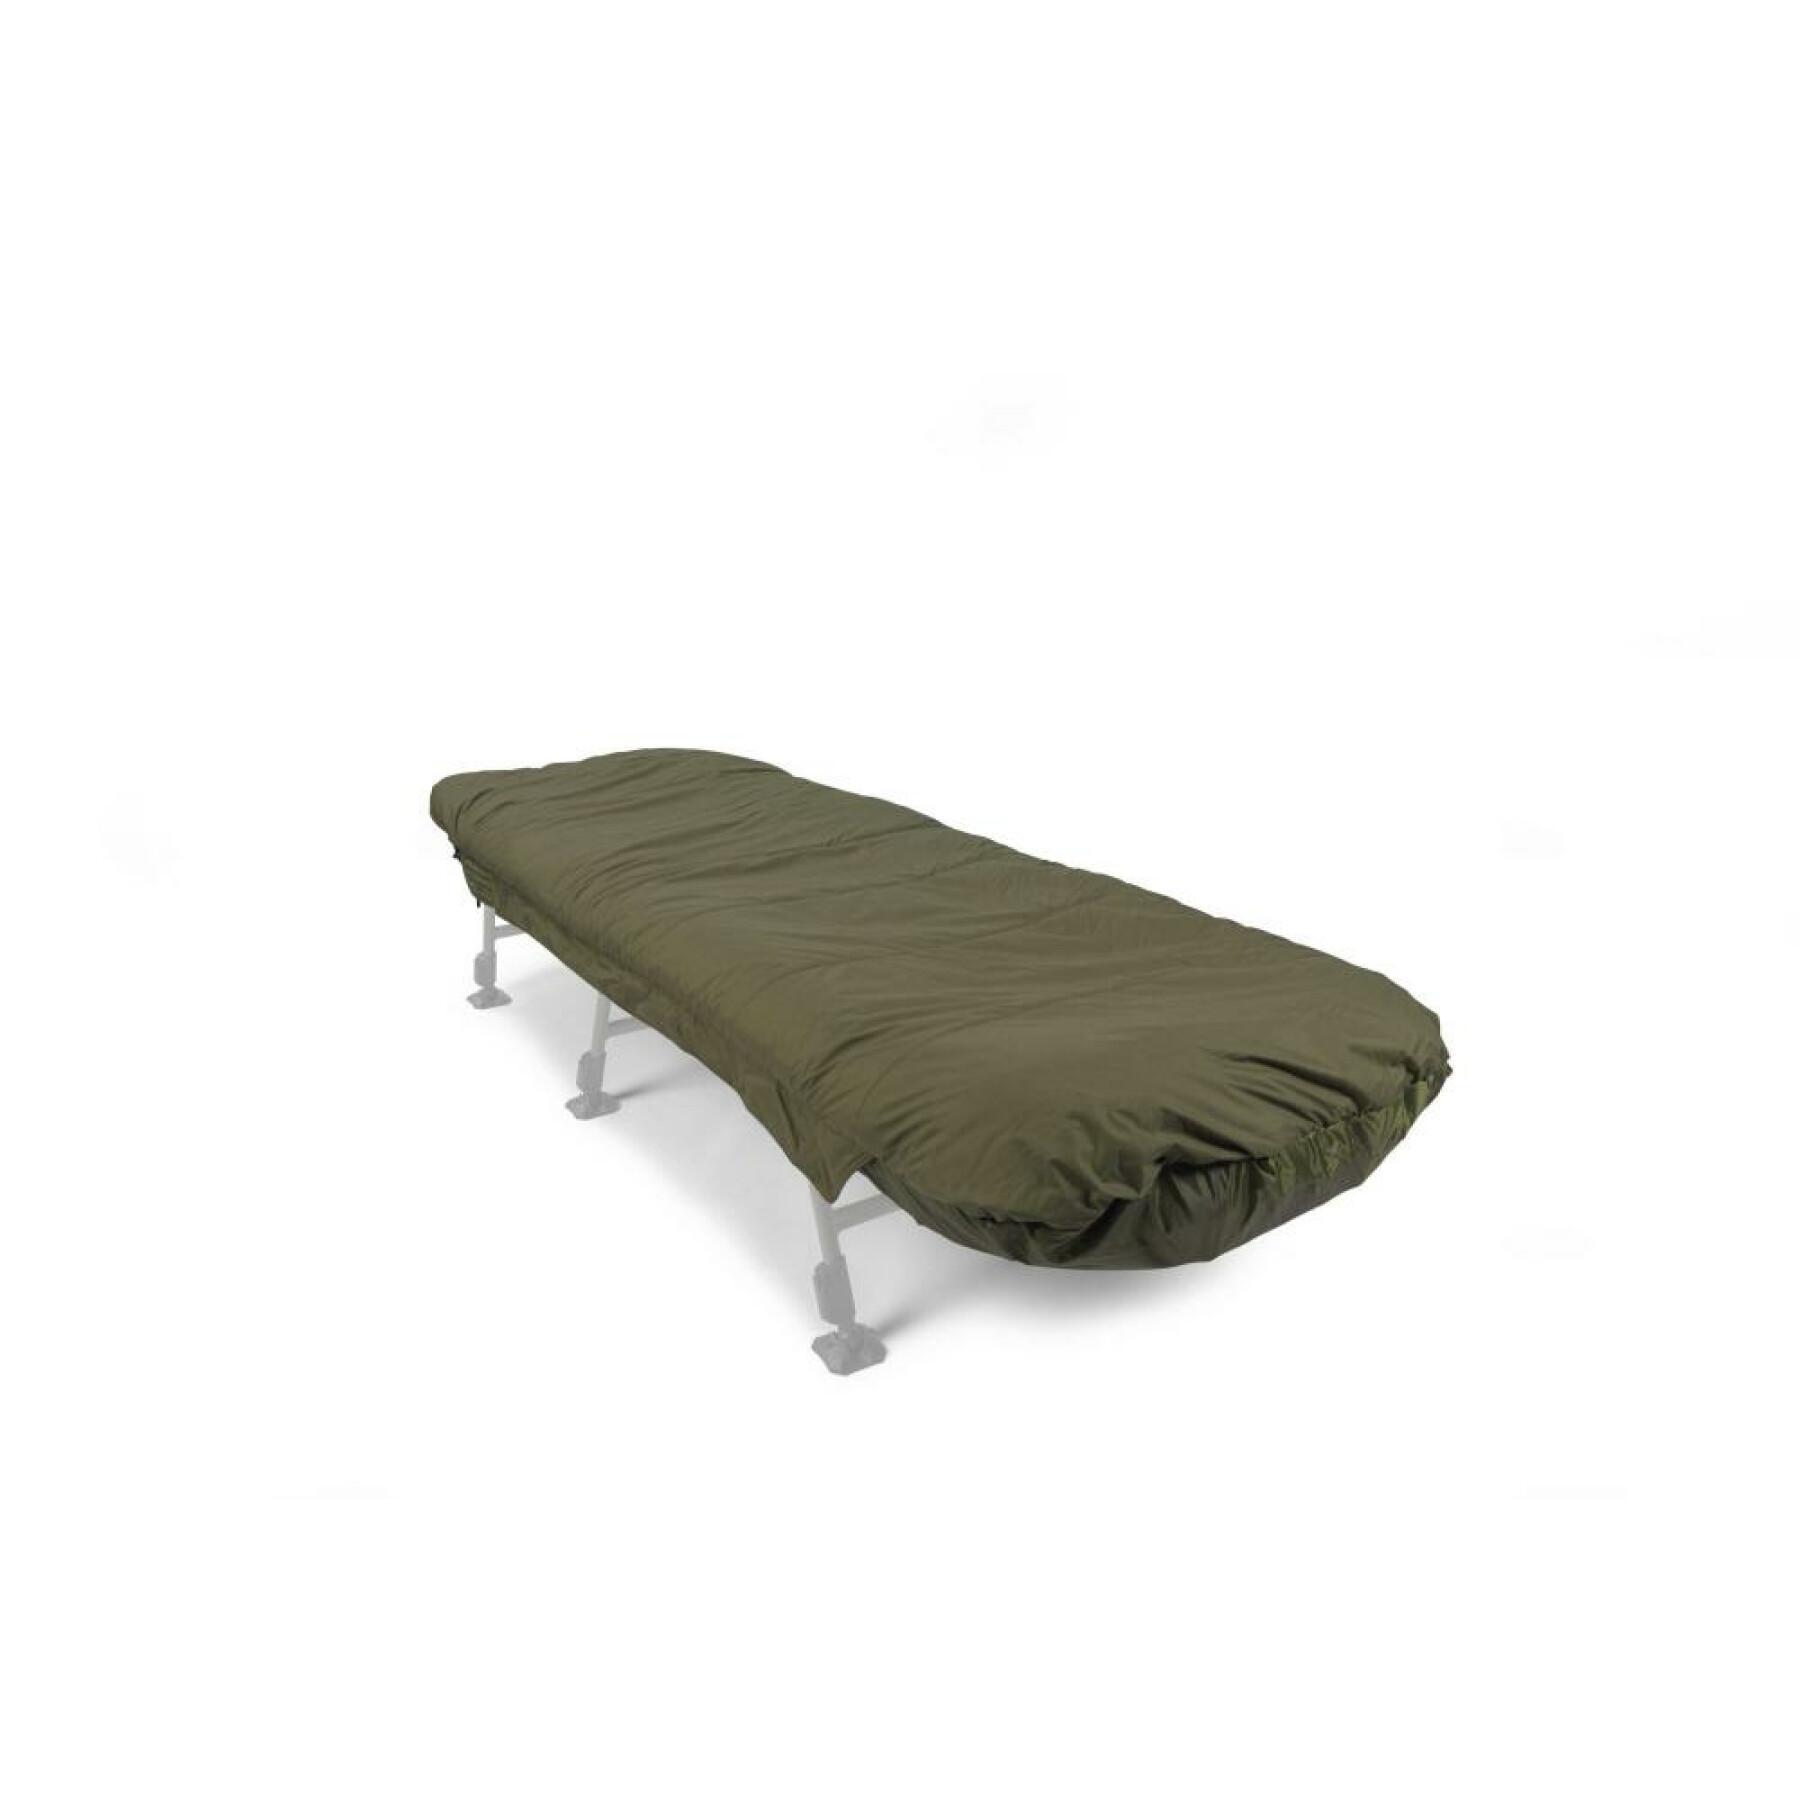 Krzesło do łóżka Avid benchmark thermatech heated sleeping bag- standard